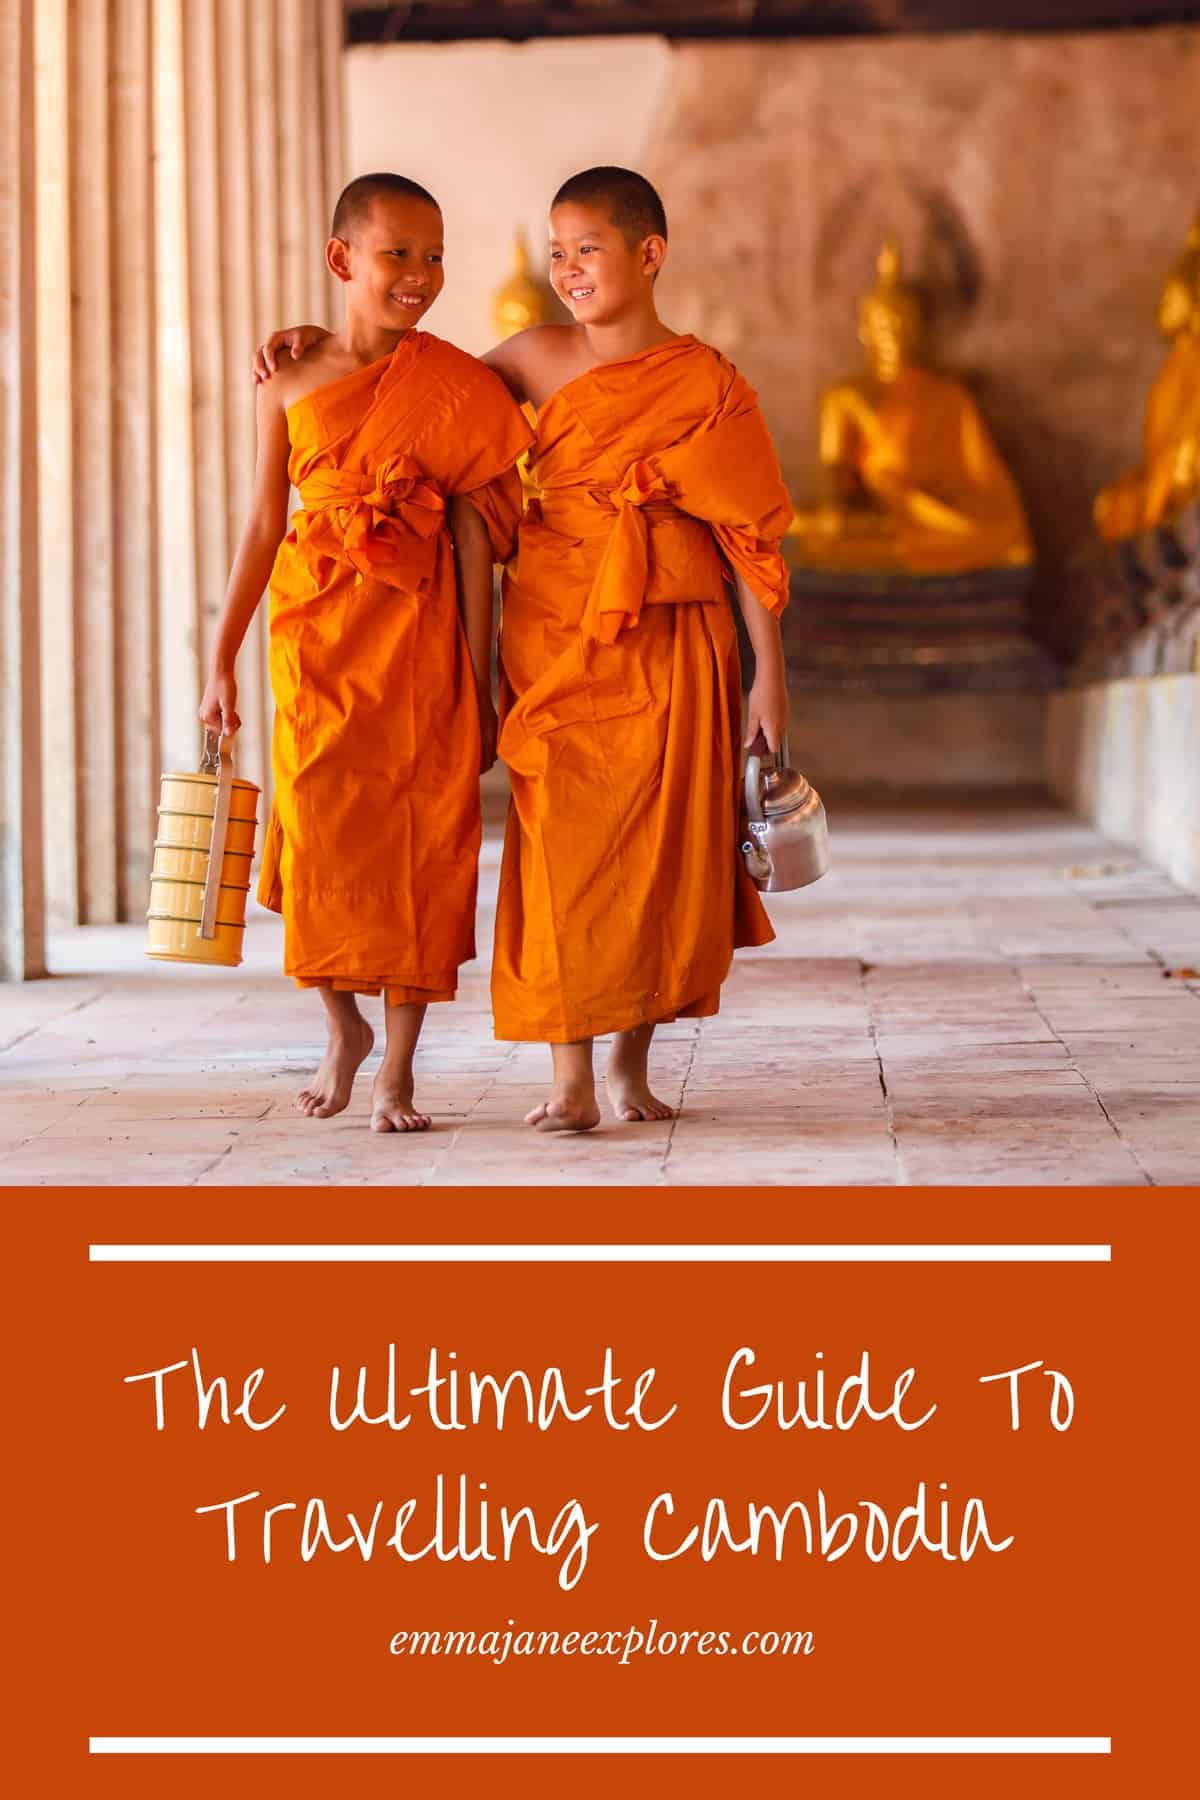 Where to go in Cambodia - The Ultimate Cambodia Travel Guide by Emma Jane Explores